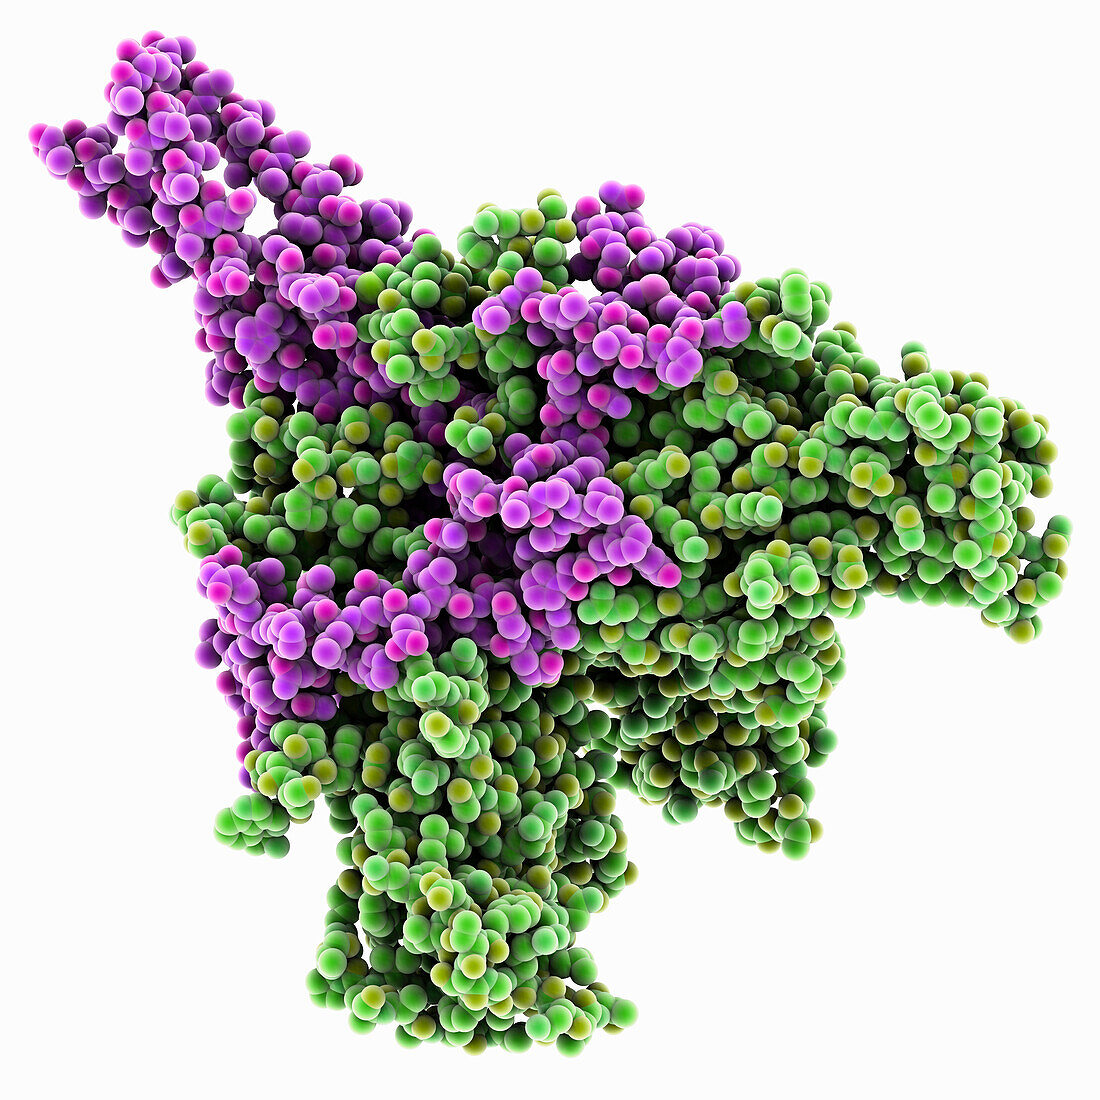 Ebola Zaire virus envelope glycoproteins, molecular model